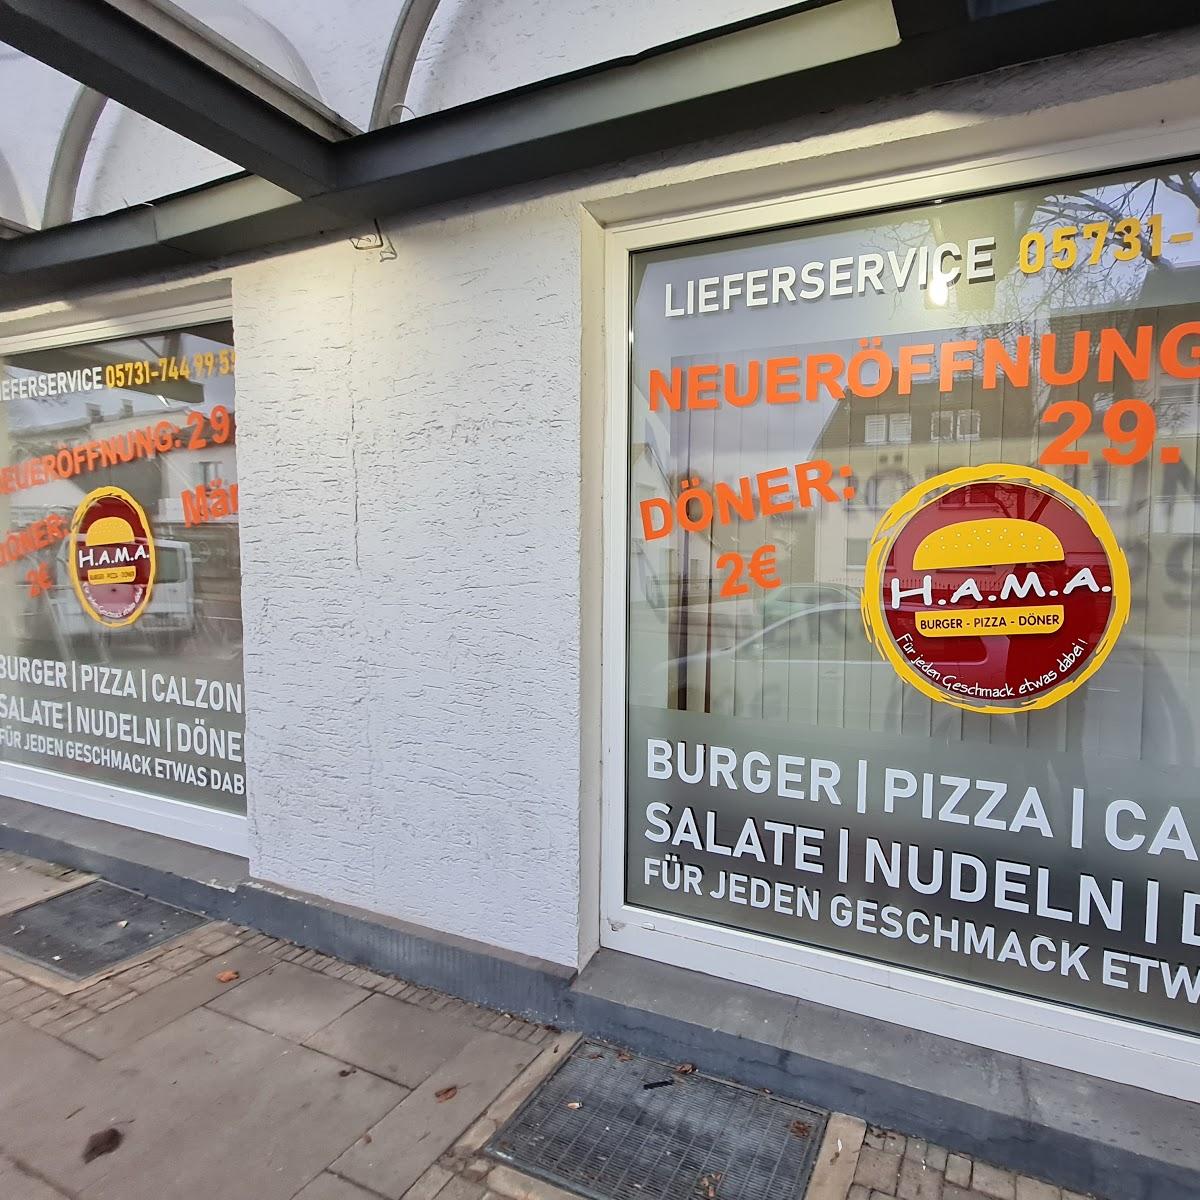 Restaurant "H.A.M.A. | Burger • Pizza • Döner" in Bad Oeynhausen